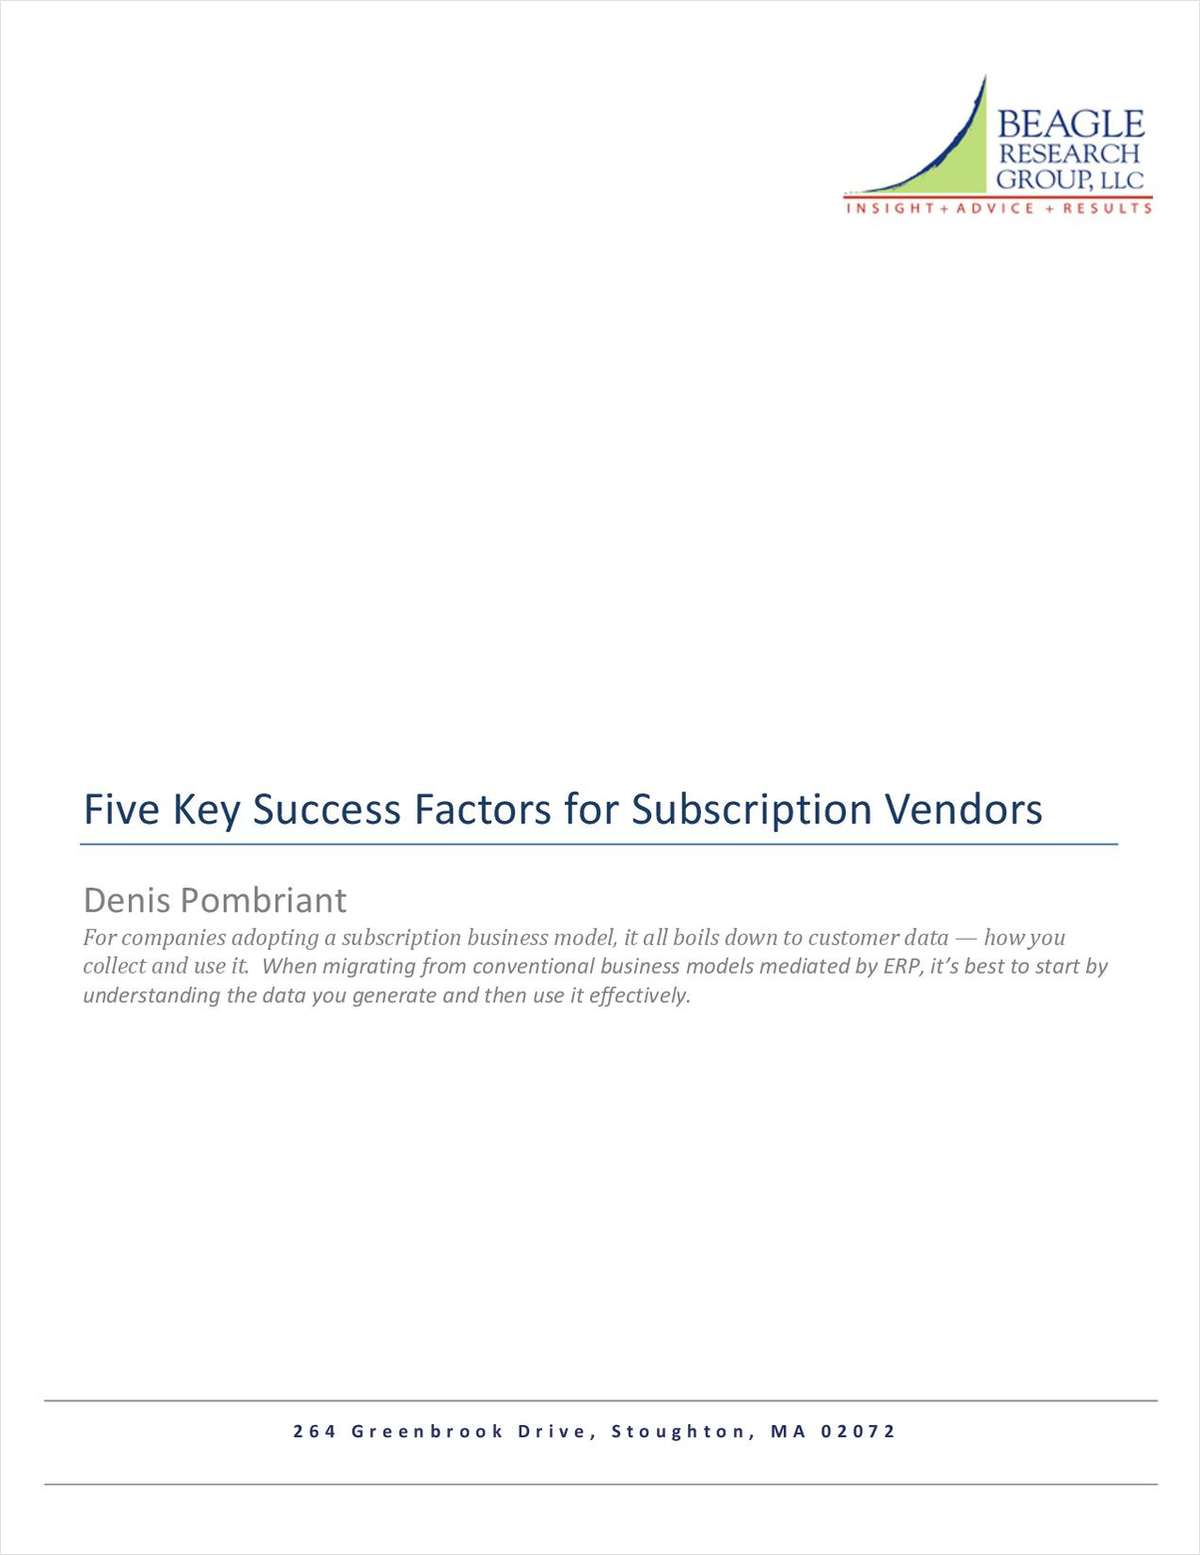 Beagle Research Report: Five Key Success Factors for Subscription Vendors